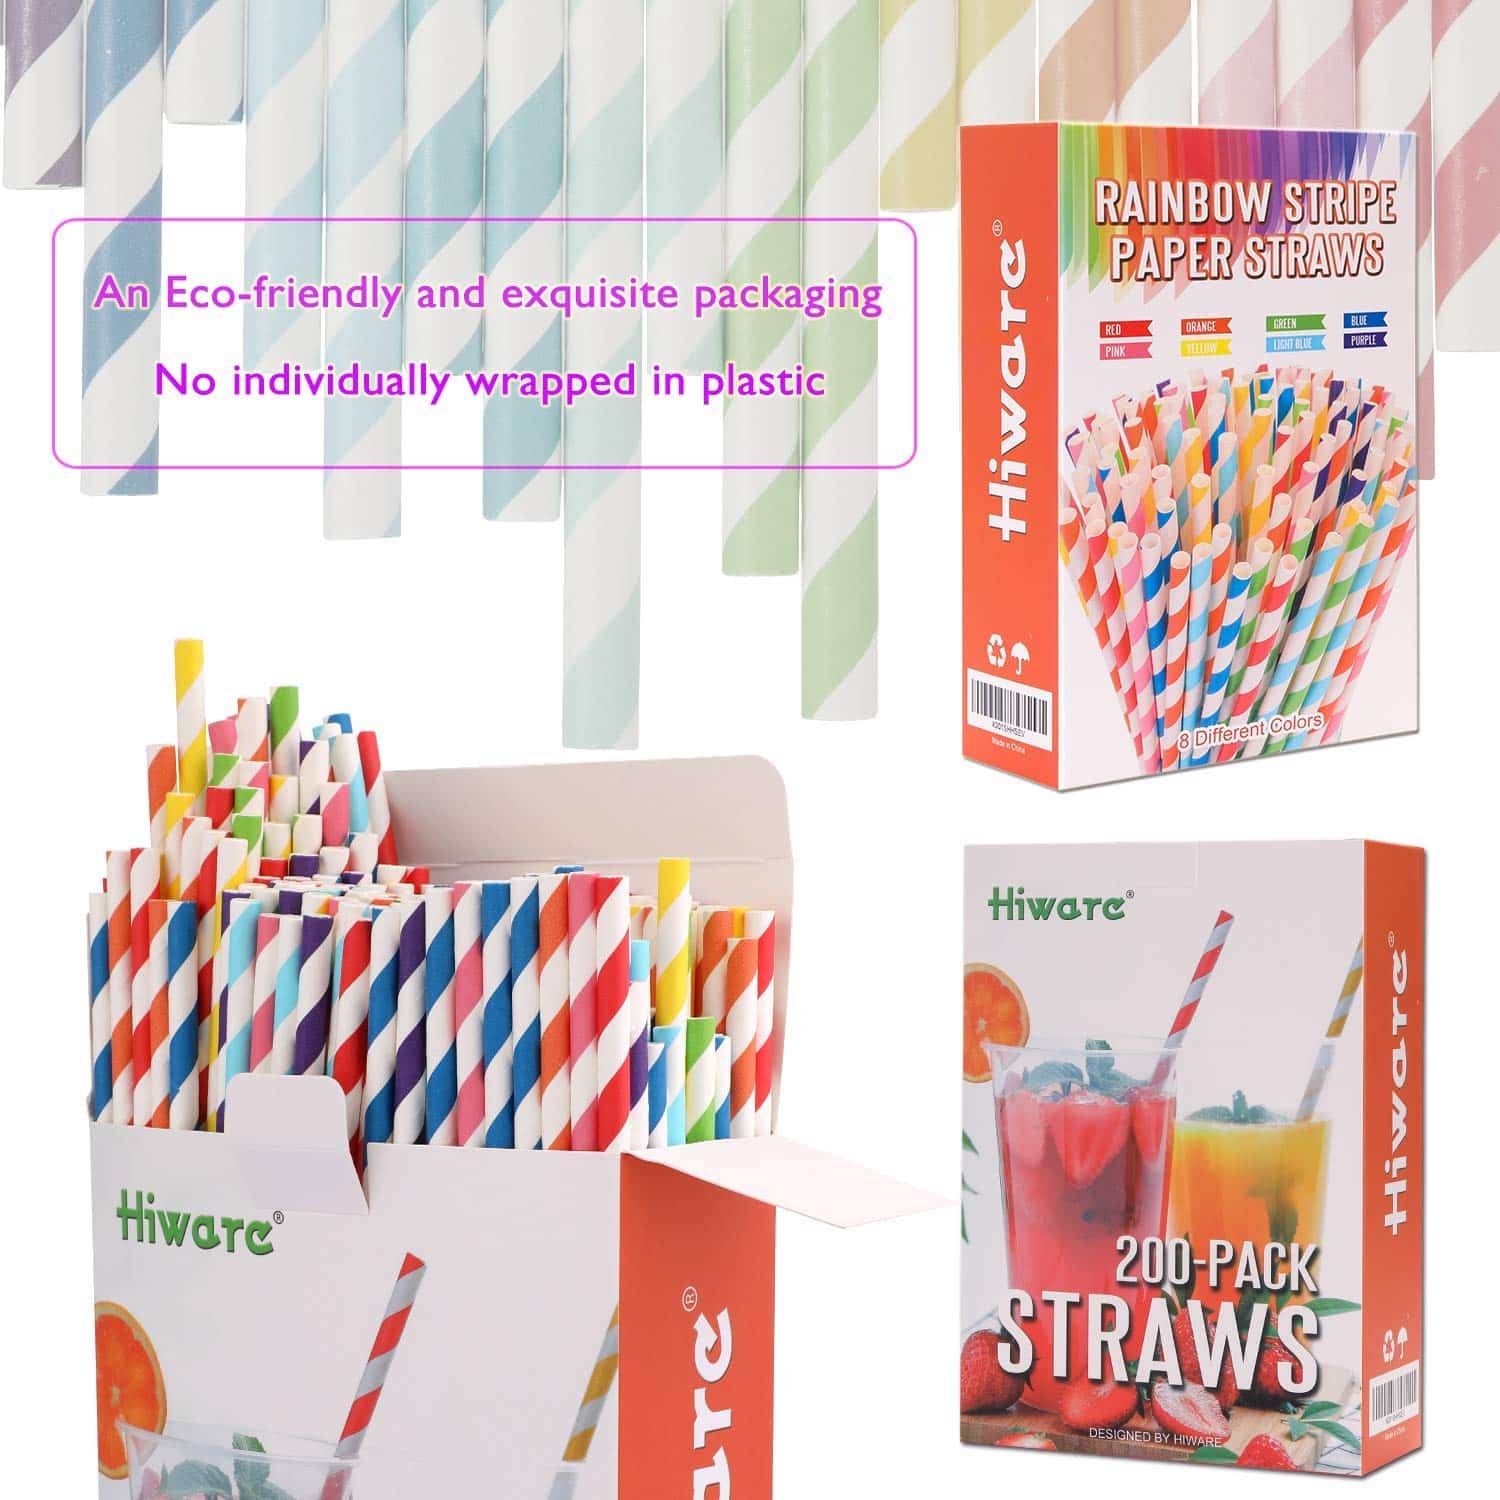 Hiware 200-Pack Biodegradable Paper Straws $6.99 (REG $15.99)